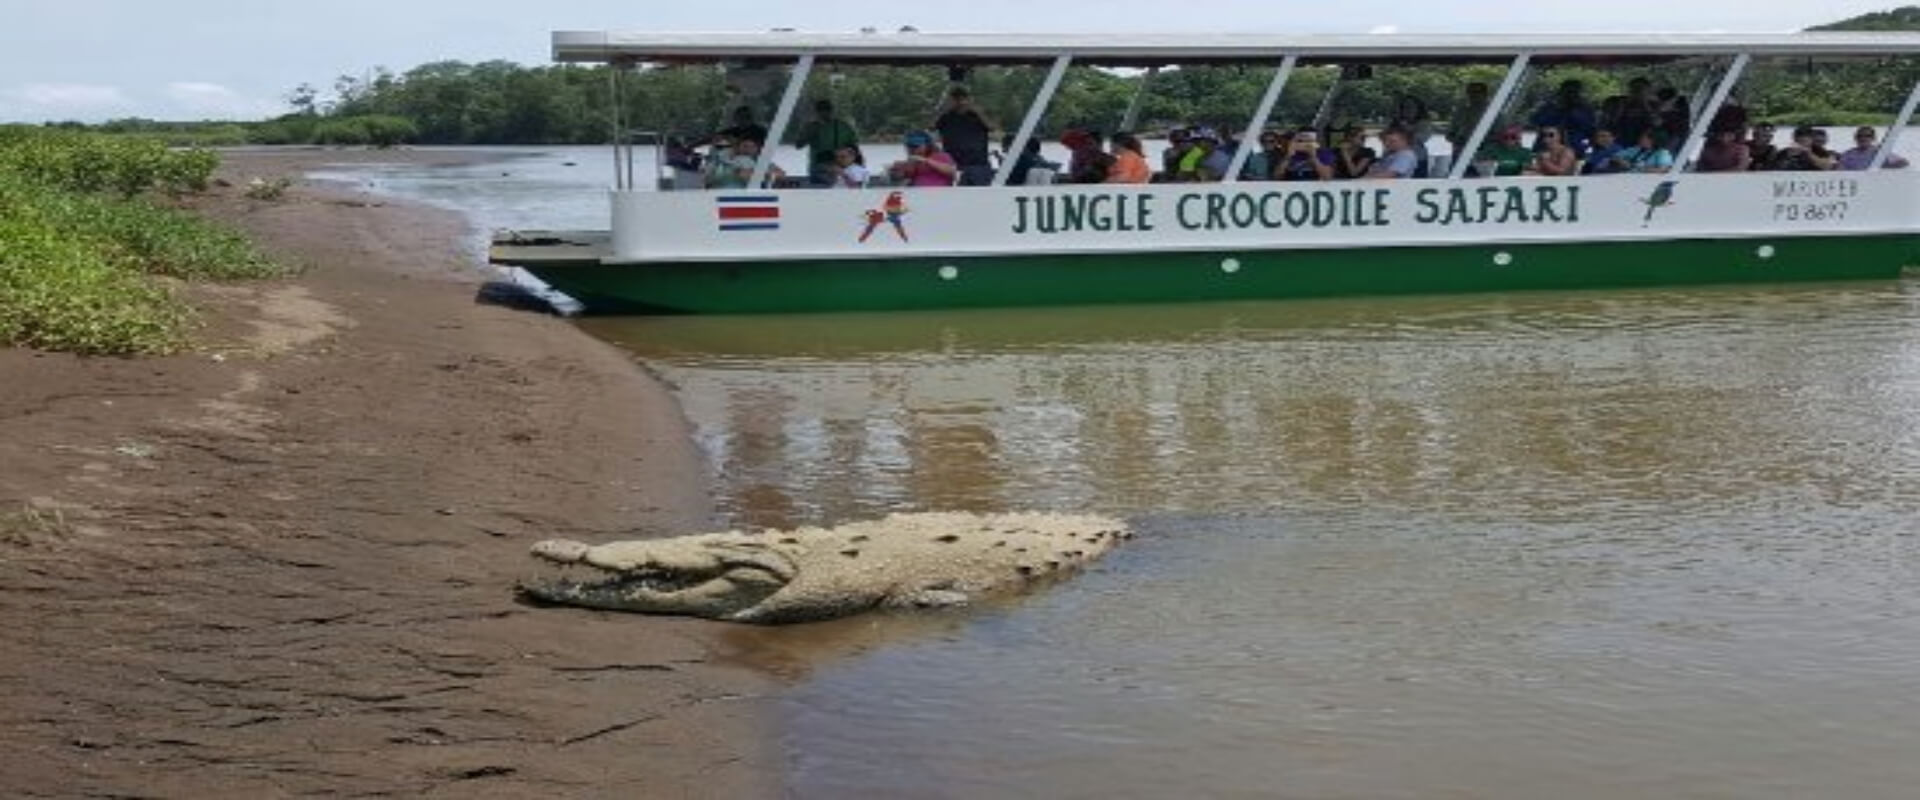 Safari de cocodrilos | Costa Rica Jade Tours